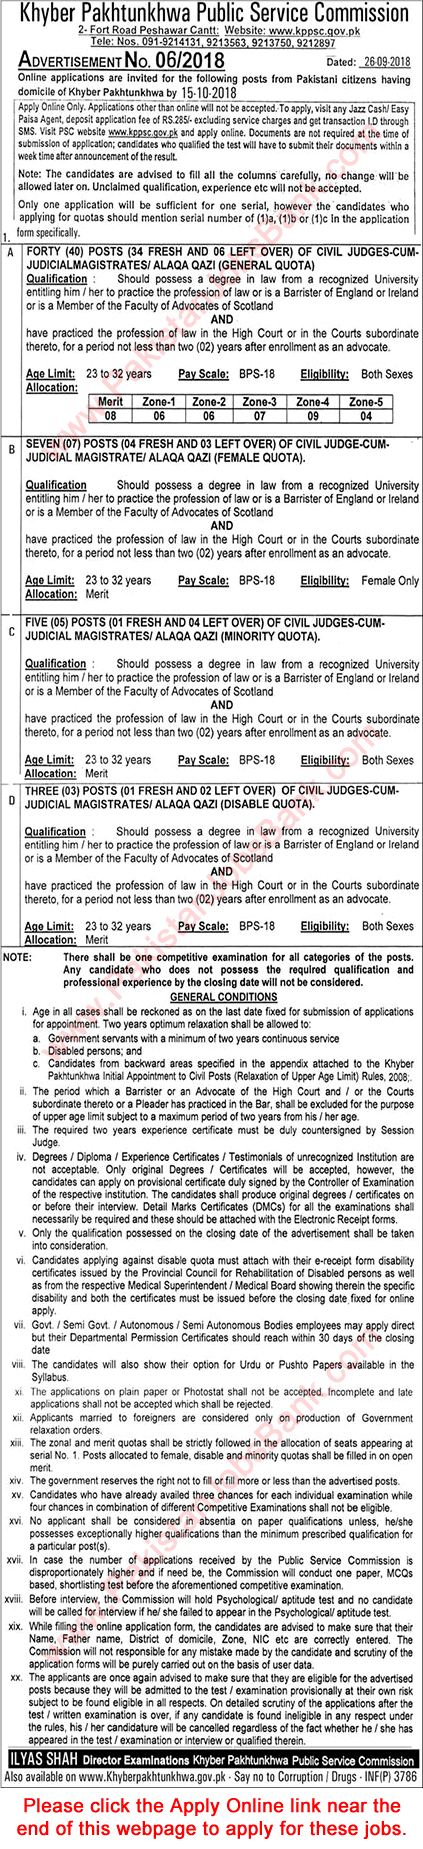 KPPSC Jobs September 2018 October KPK Public Service Commission Civil Judge Apply Online Advertisement No. 6/2018 Latest